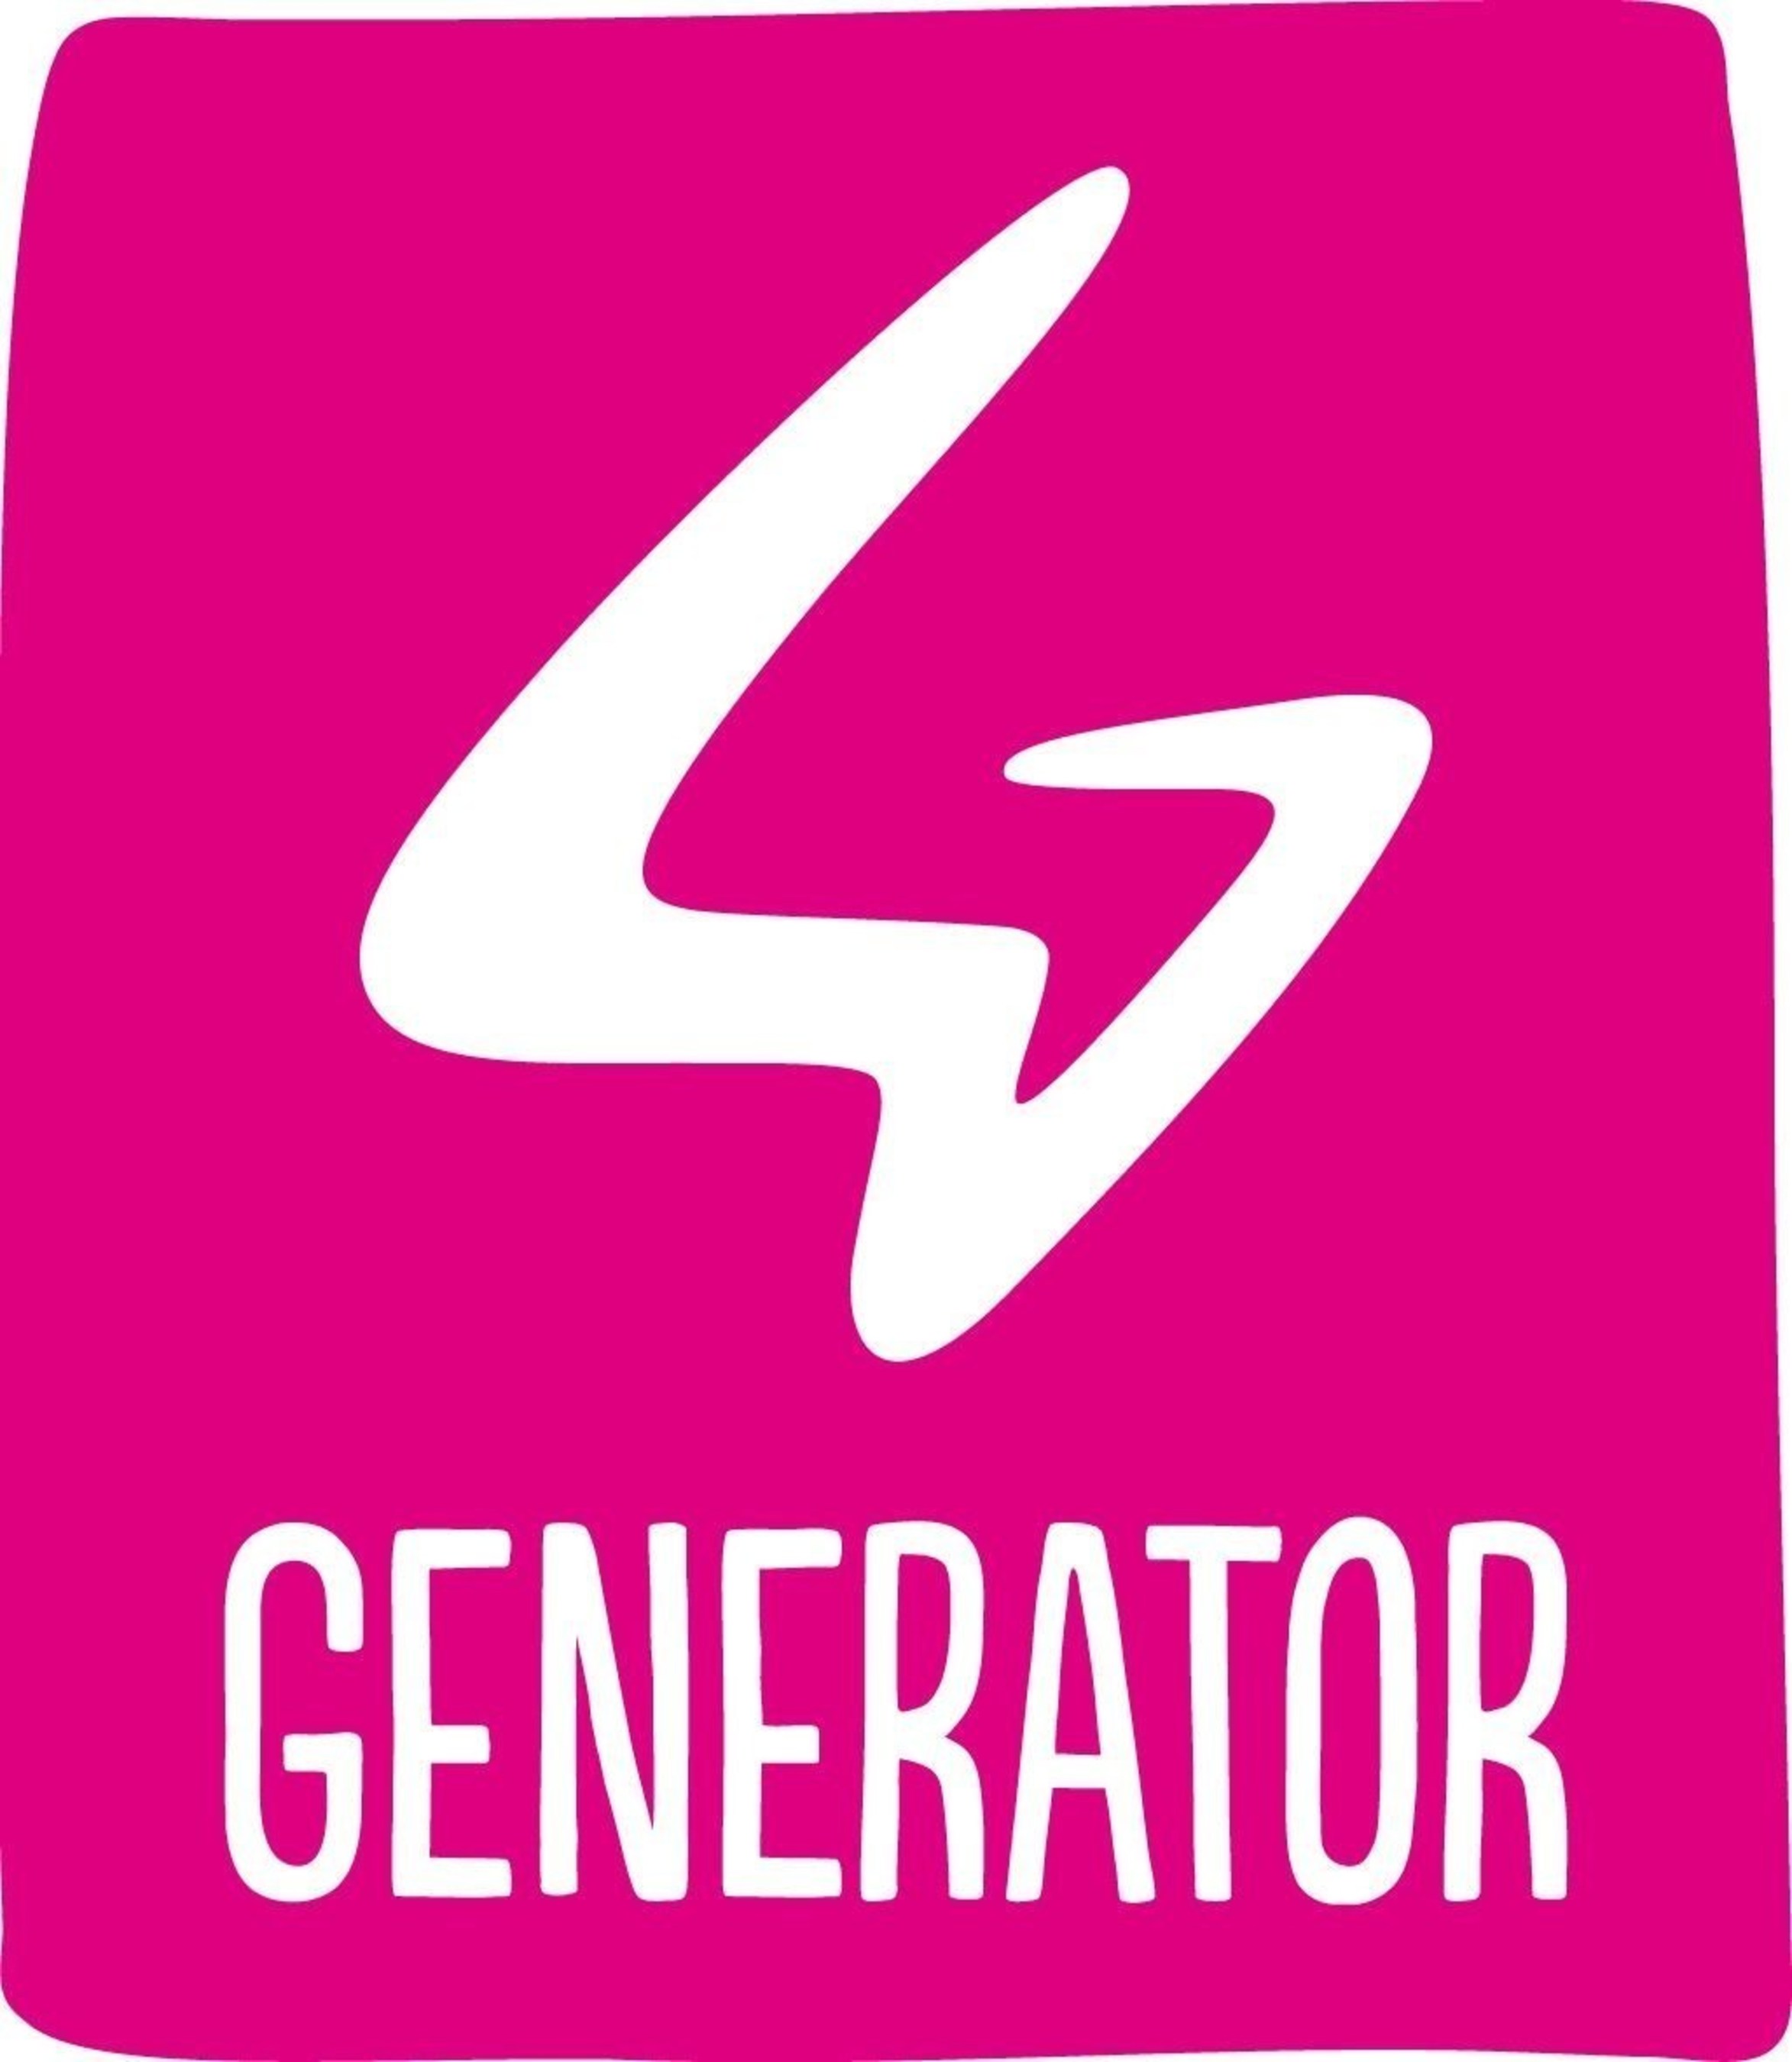 Generator Hostels (PRNewsFoto/Generator Hostels) (PRNewsFoto/Generator Hostels)